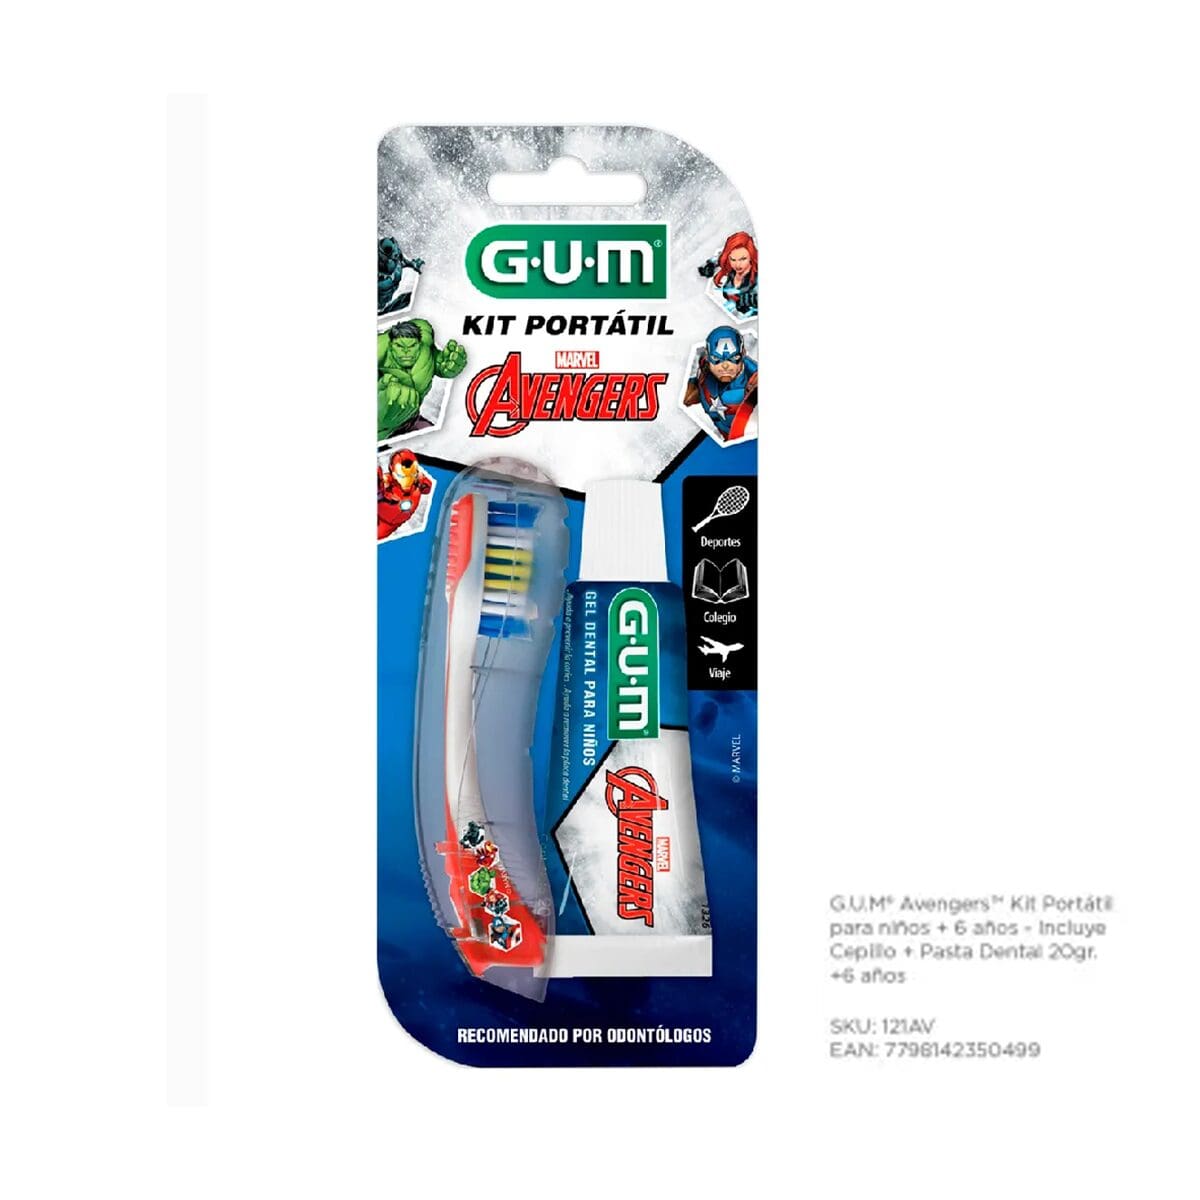 GUM Kit Viajero: Cepillo portátil Avengers para niños + pasta